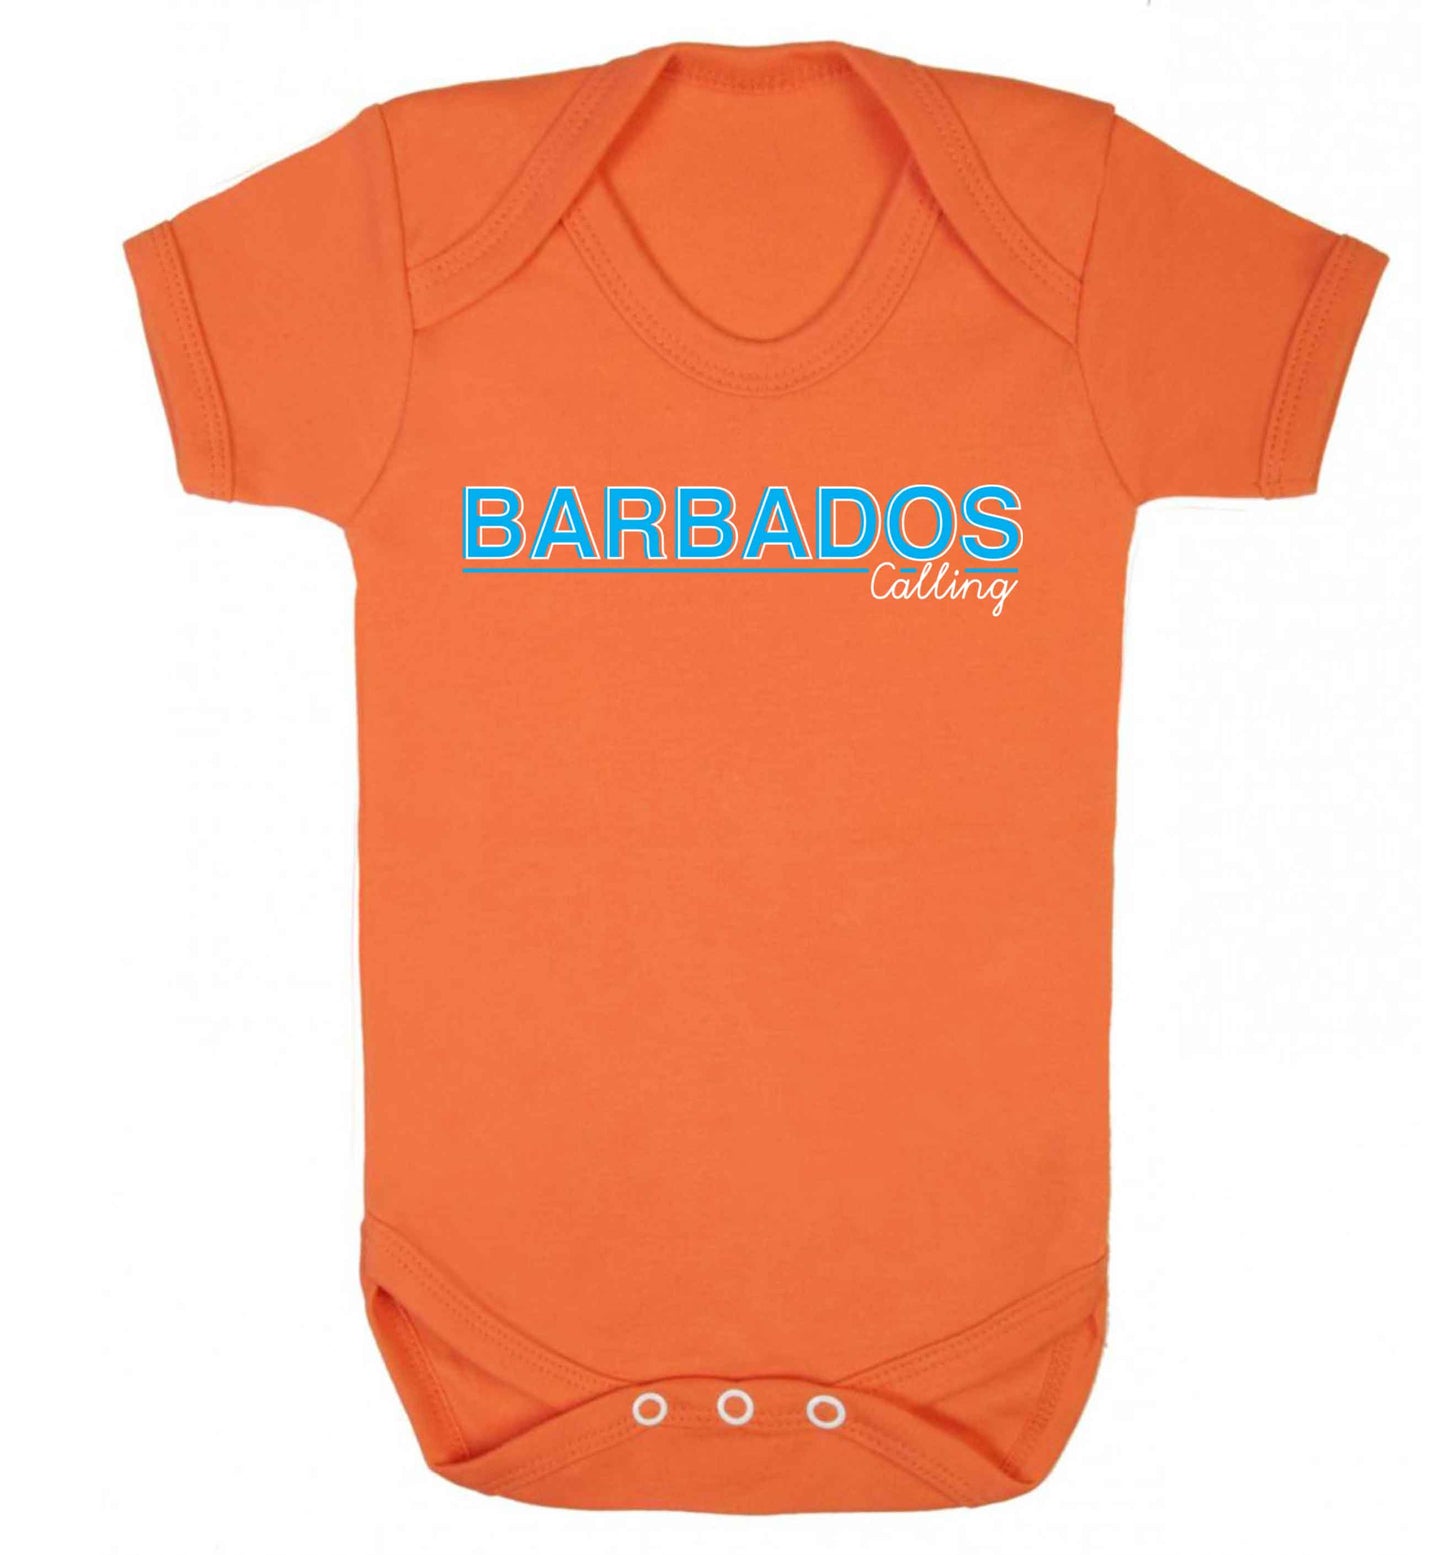 Barbados calling Baby Vest orange 18-24 months